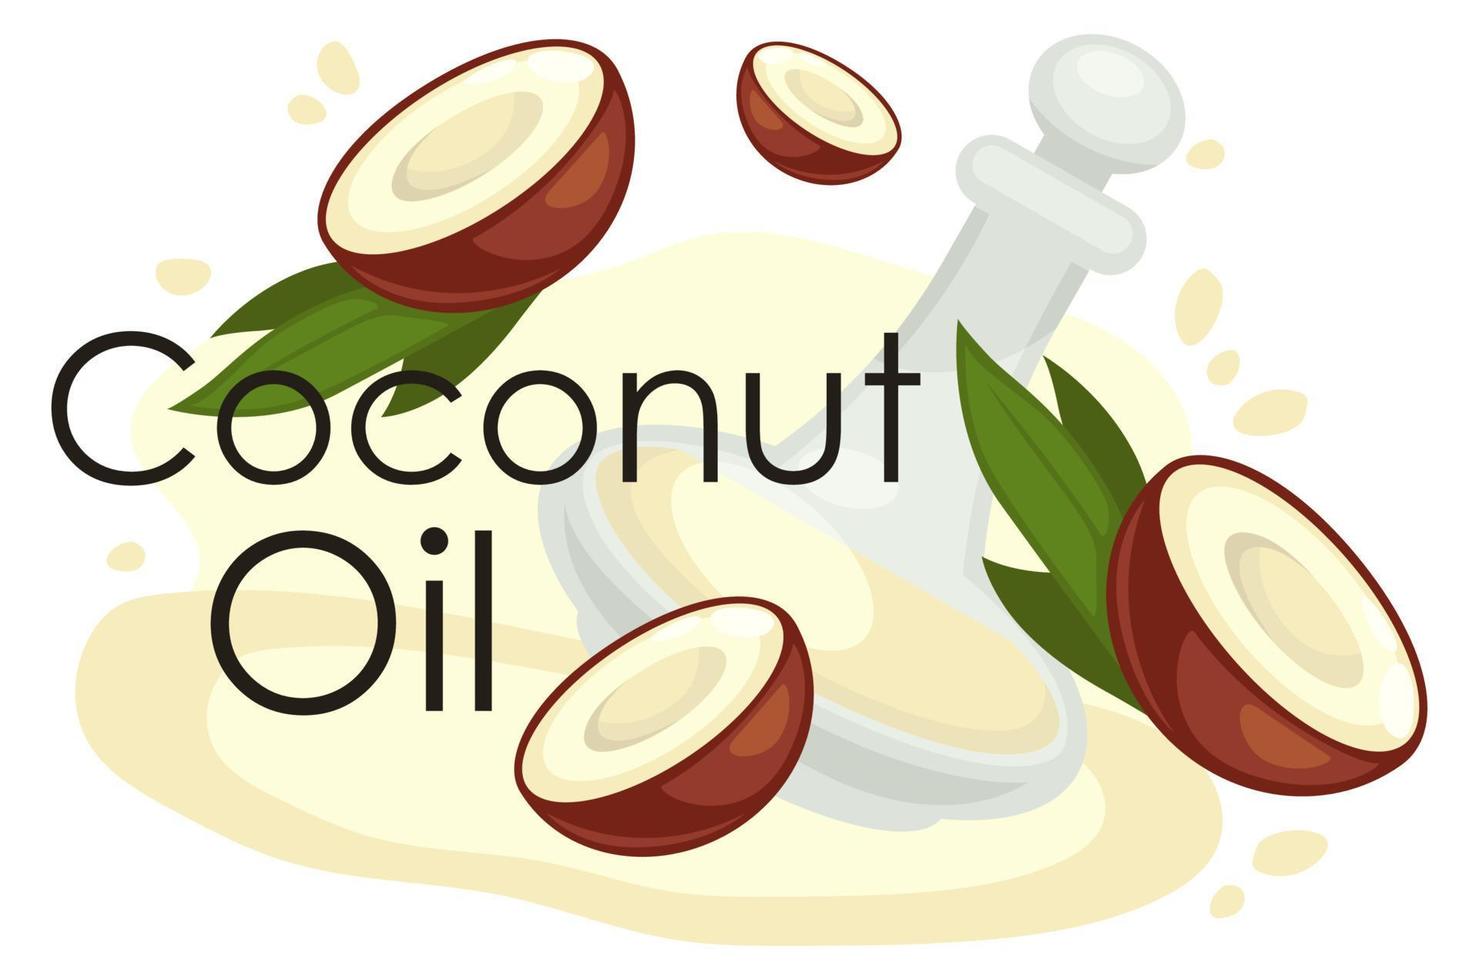 Coconut oil, fat oily liquid with vitamins vector